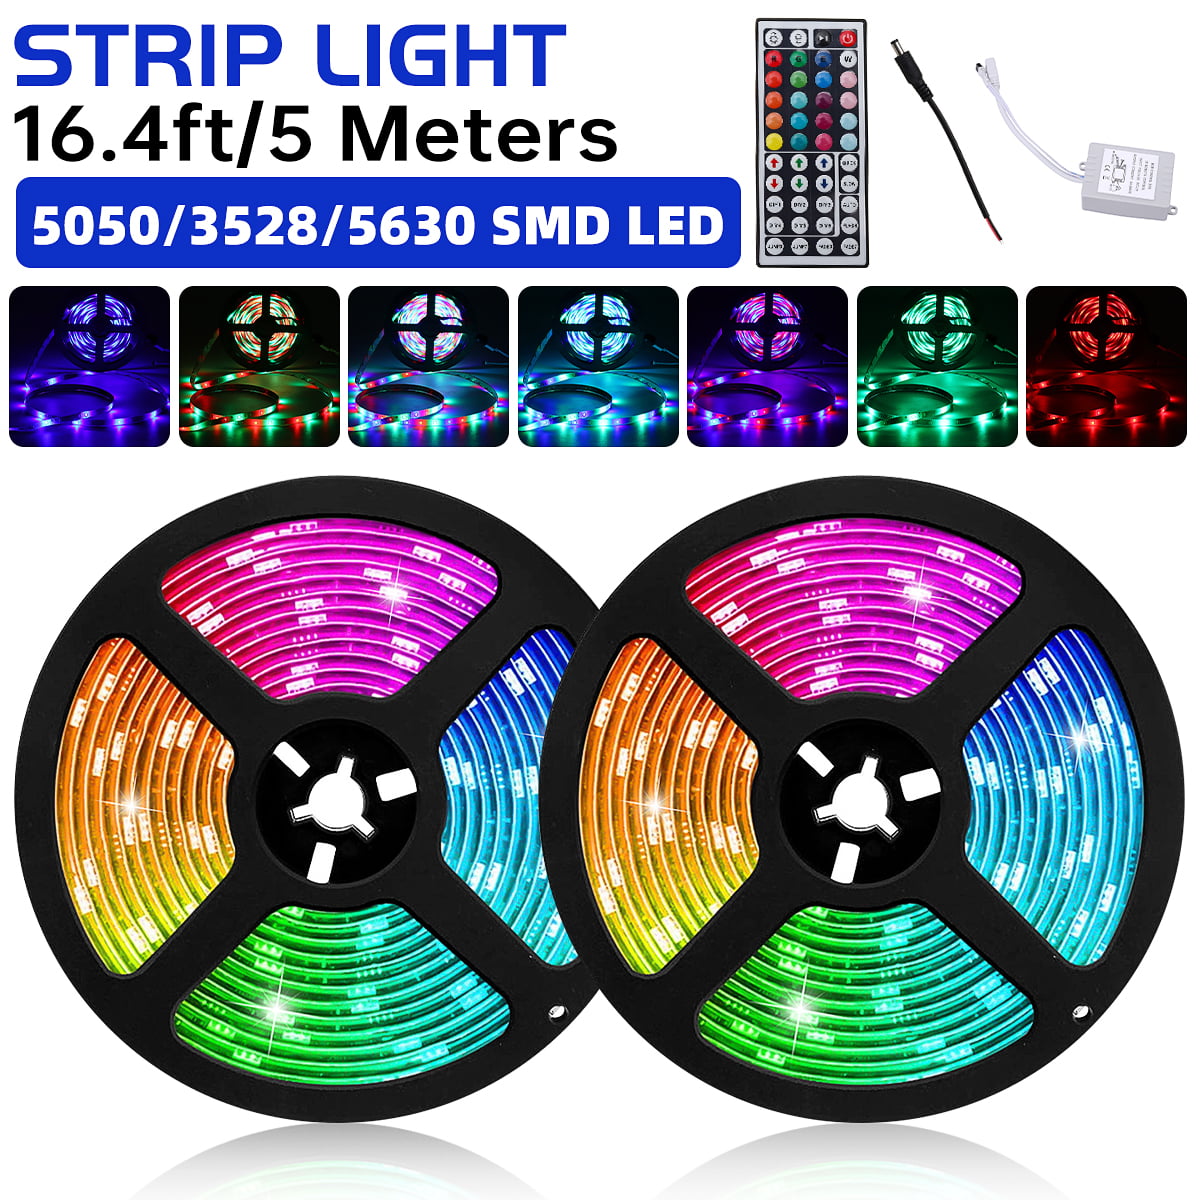 5M 300 LED Strip Light SMD 3528 5050 5630 RGB/White Flexible+Remote+Power Supply 